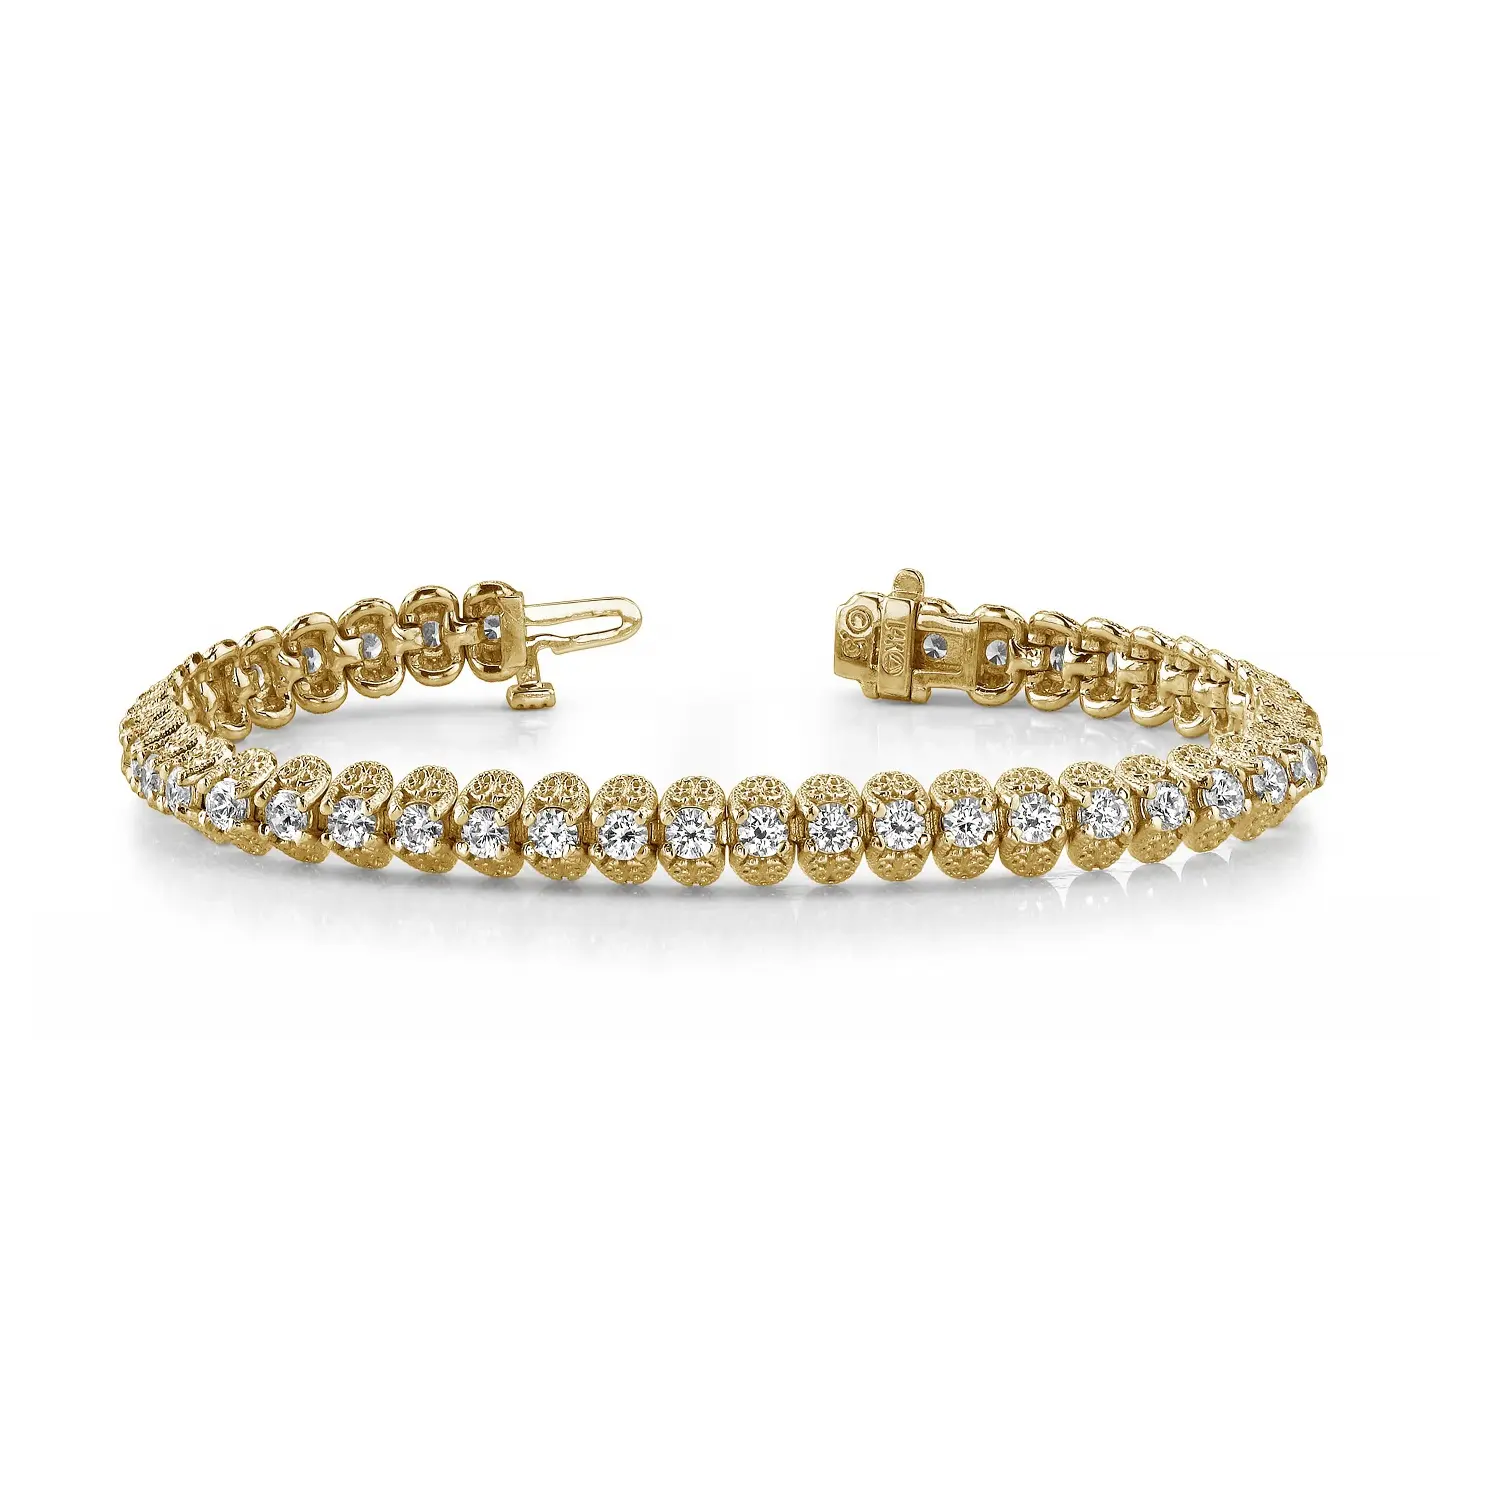 New Collection Filigree Diamond Tennis Bracelet for Pretty Girls Wedding Wear Tennis Bracelet with 18 Kt Real Gold